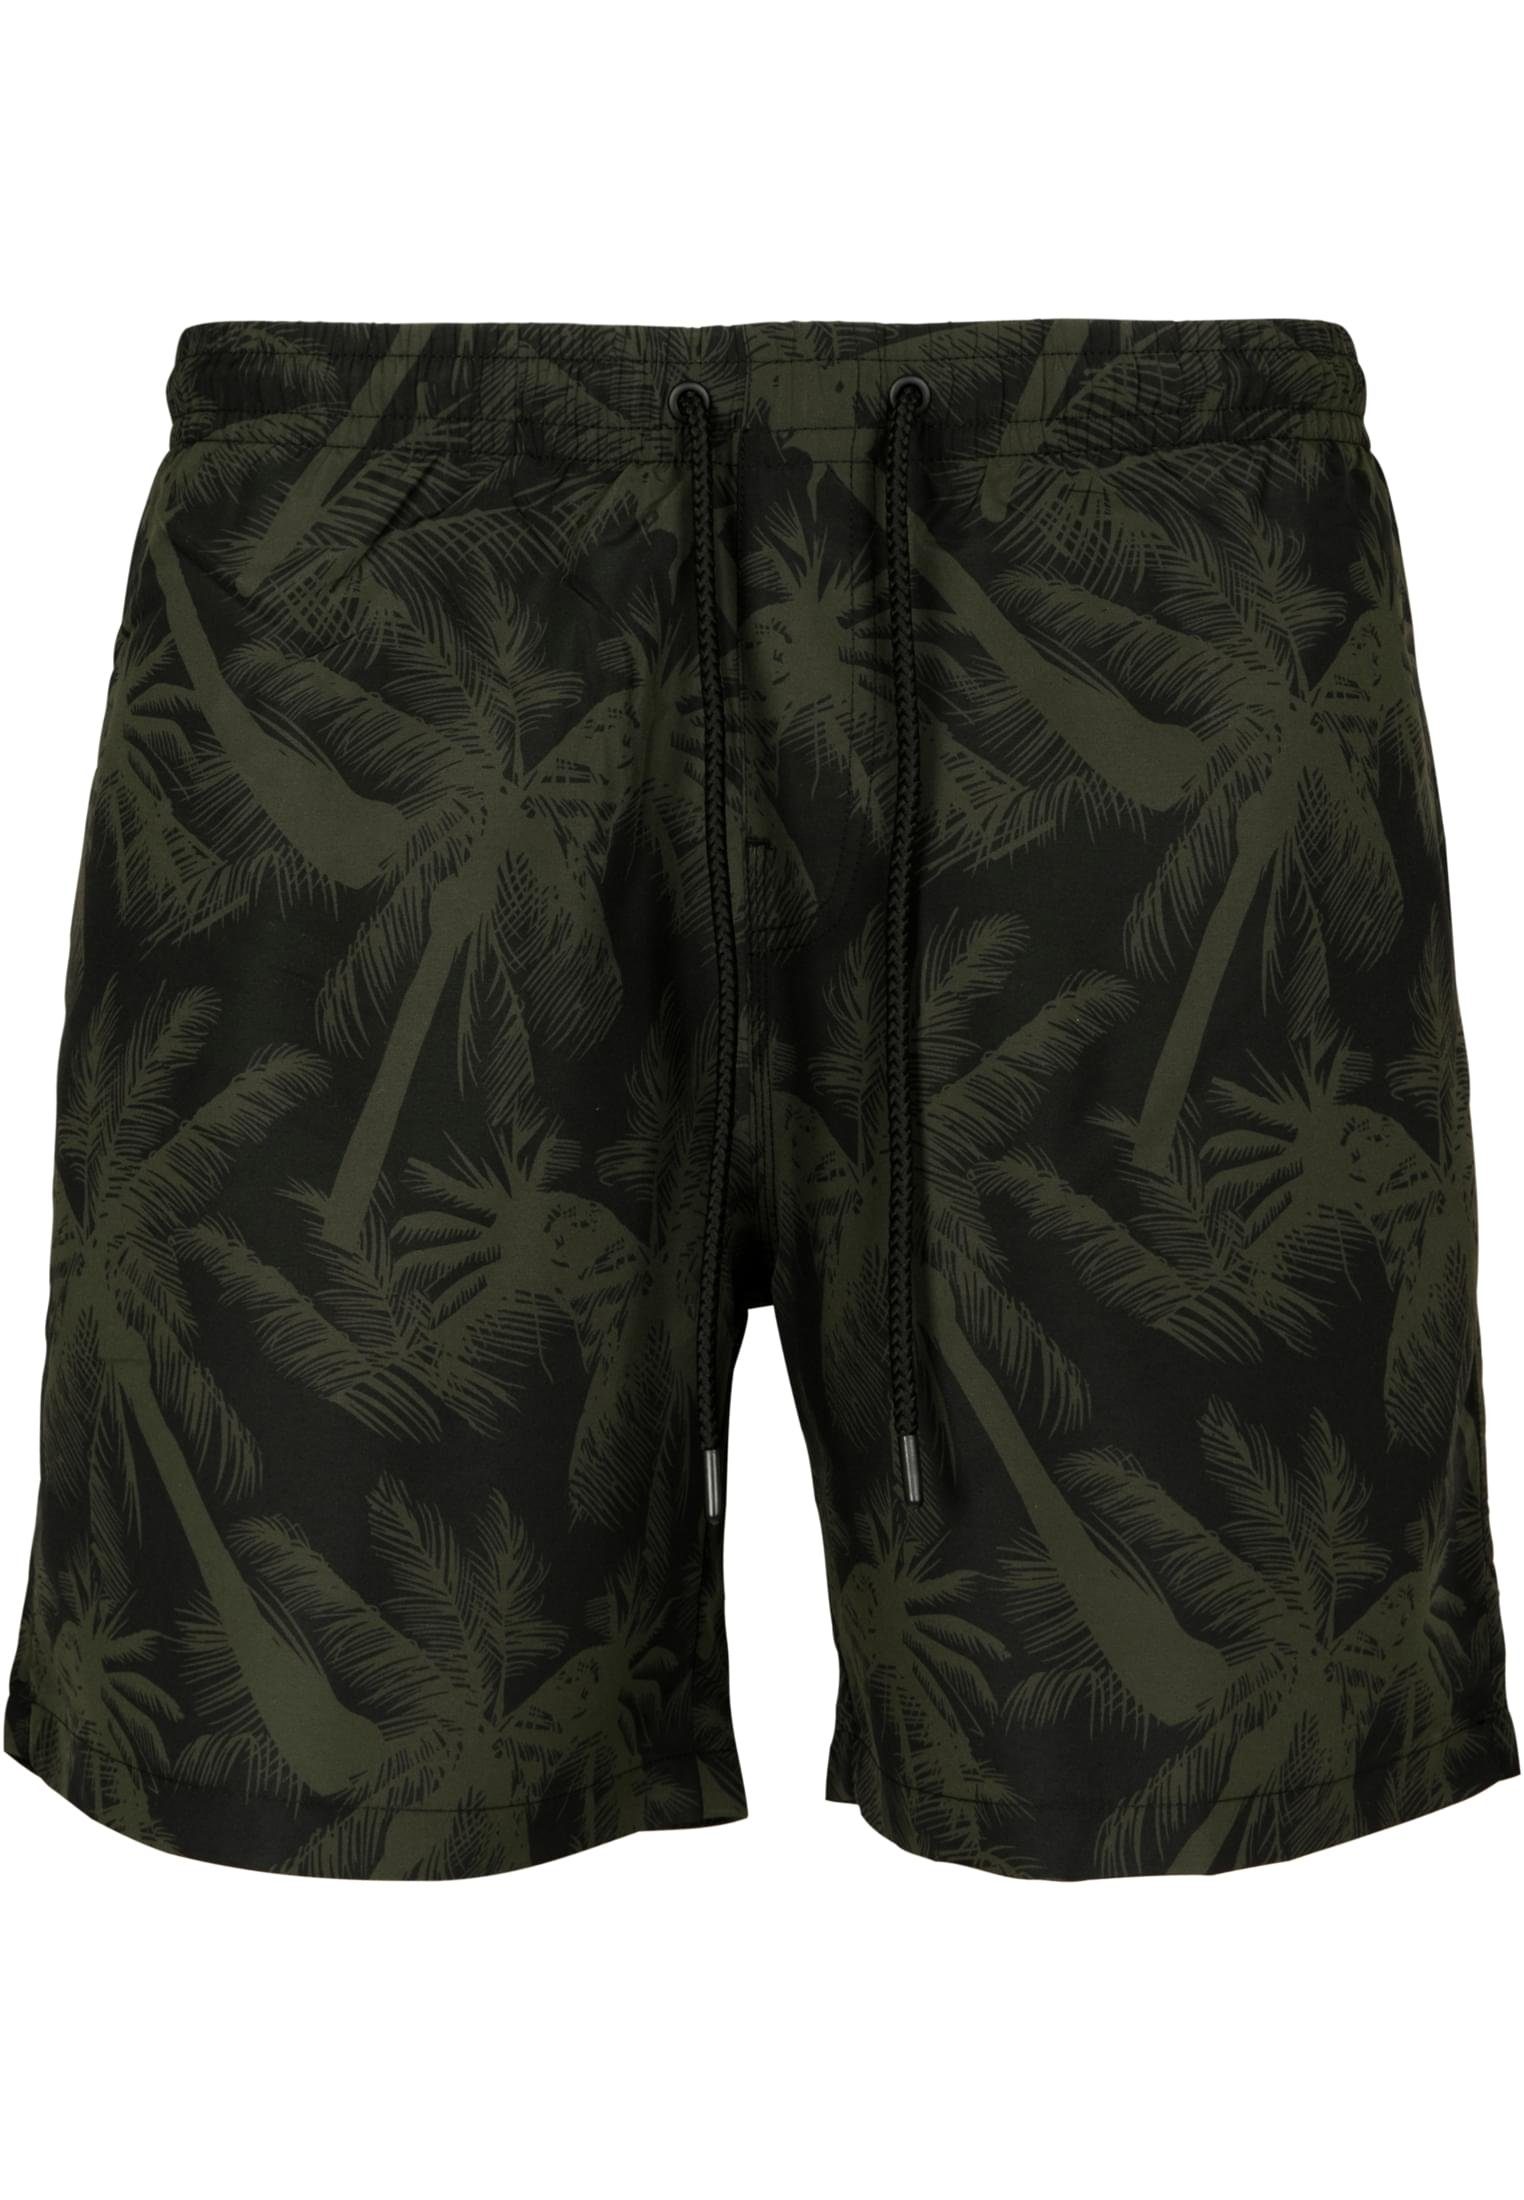 Swim Shorts palm/olive Herren Badeshorts CLASSICS URBAN Pattern